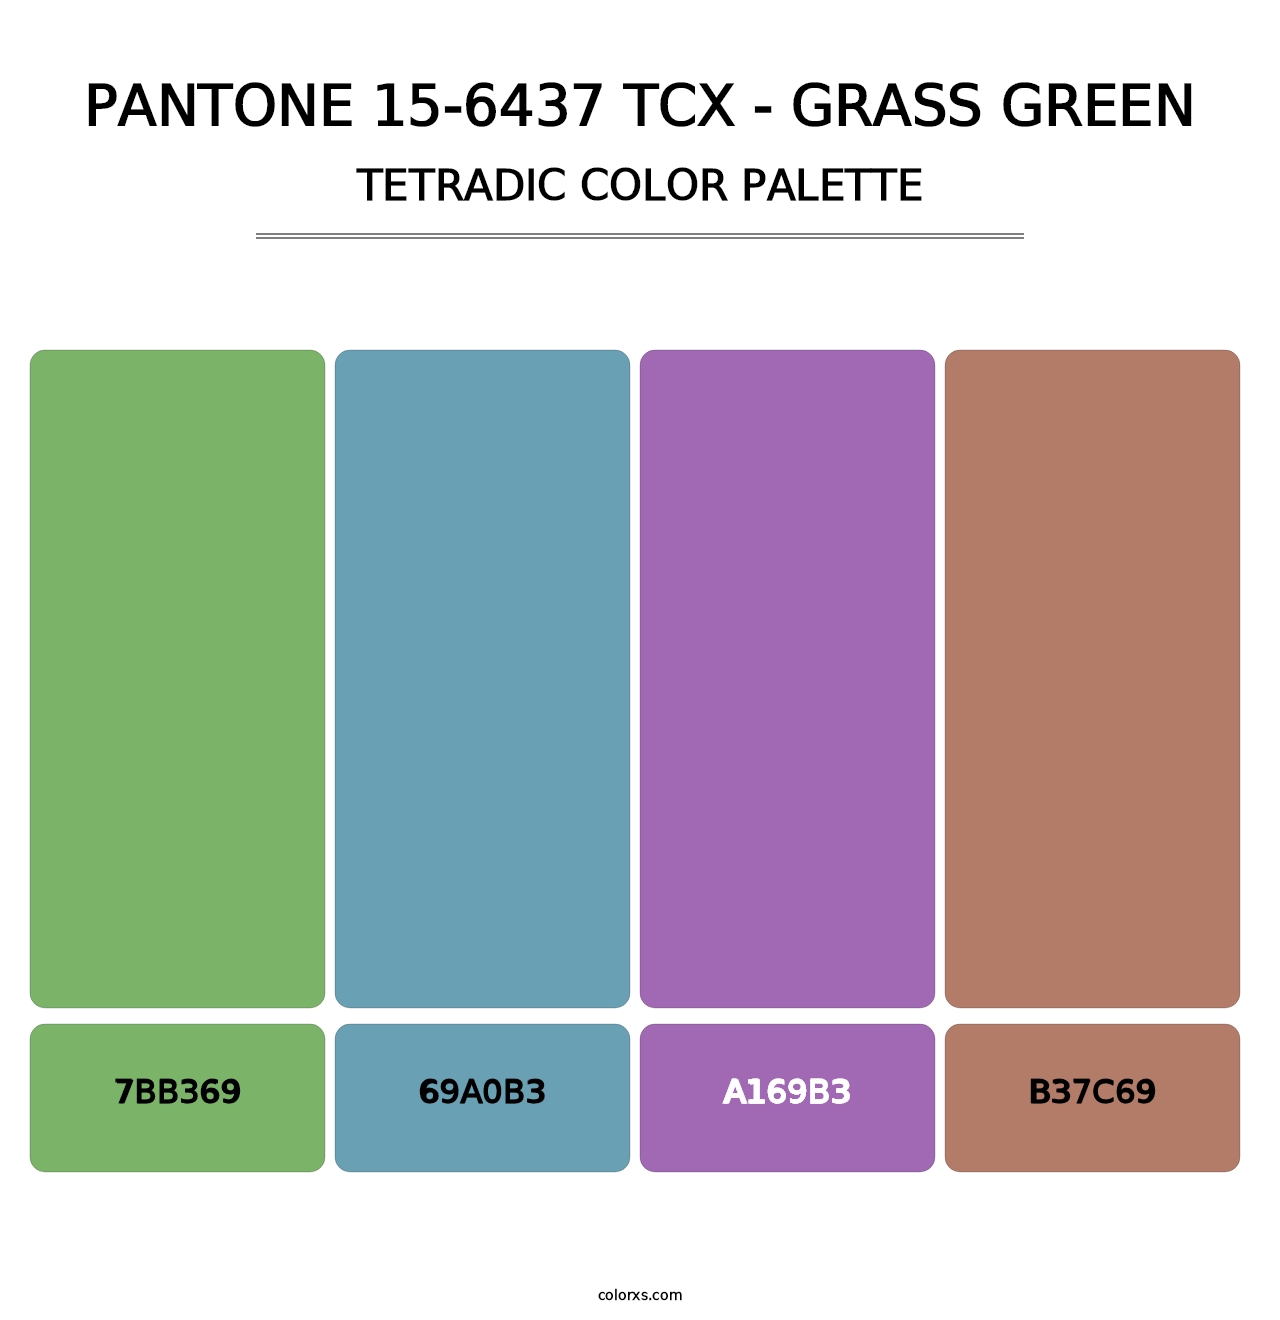 PANTONE 15-6437 TCX - Grass Green - Tetradic Color Palette